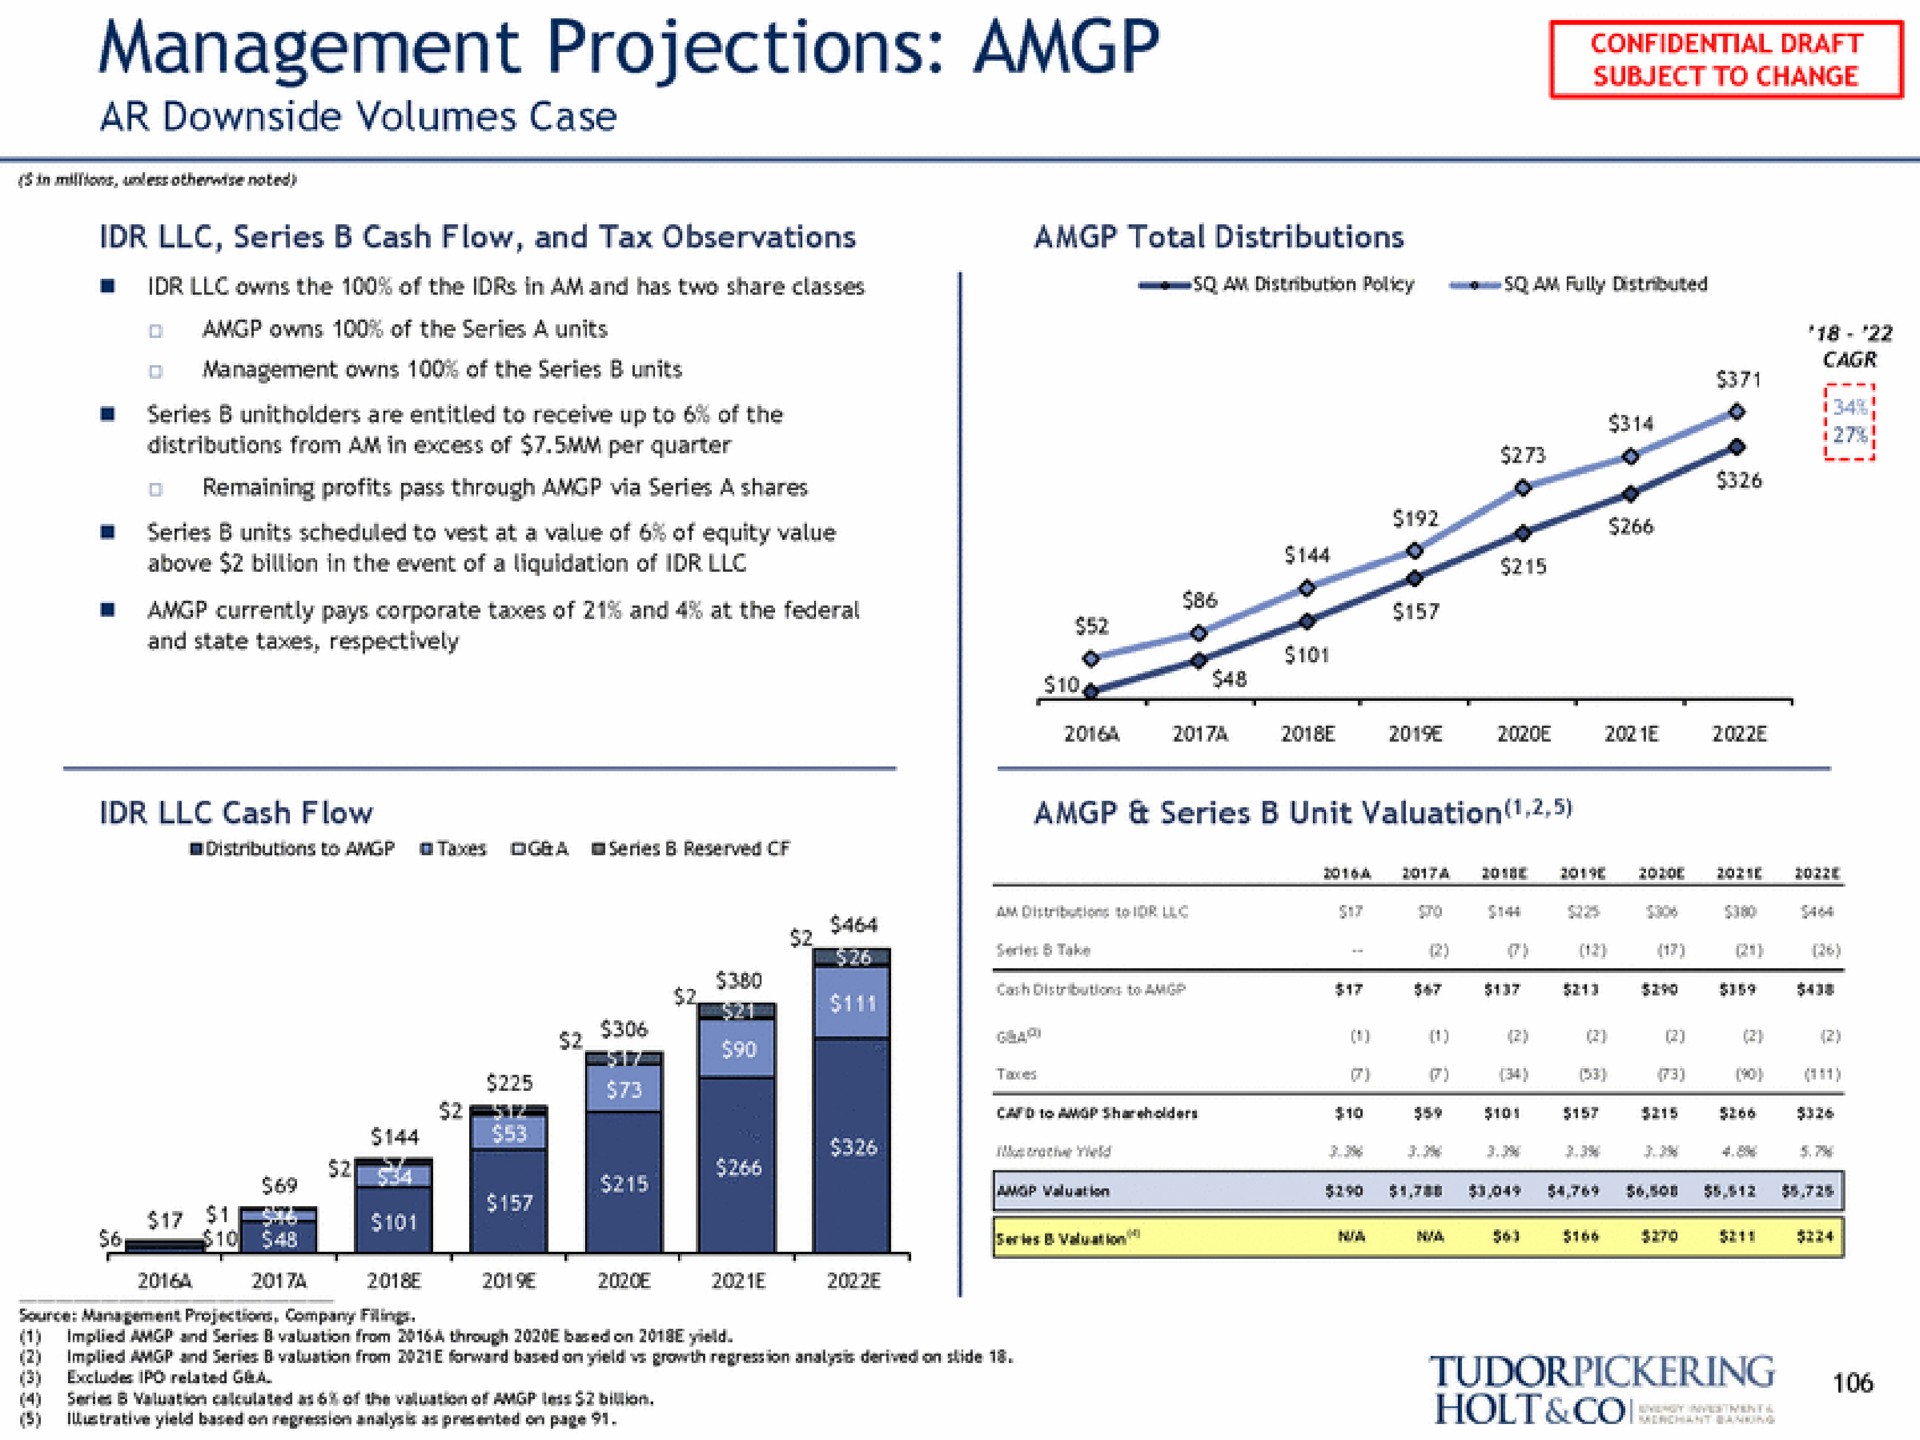 management projections downside volumes case | Tudor, Pickering, Holt & Co